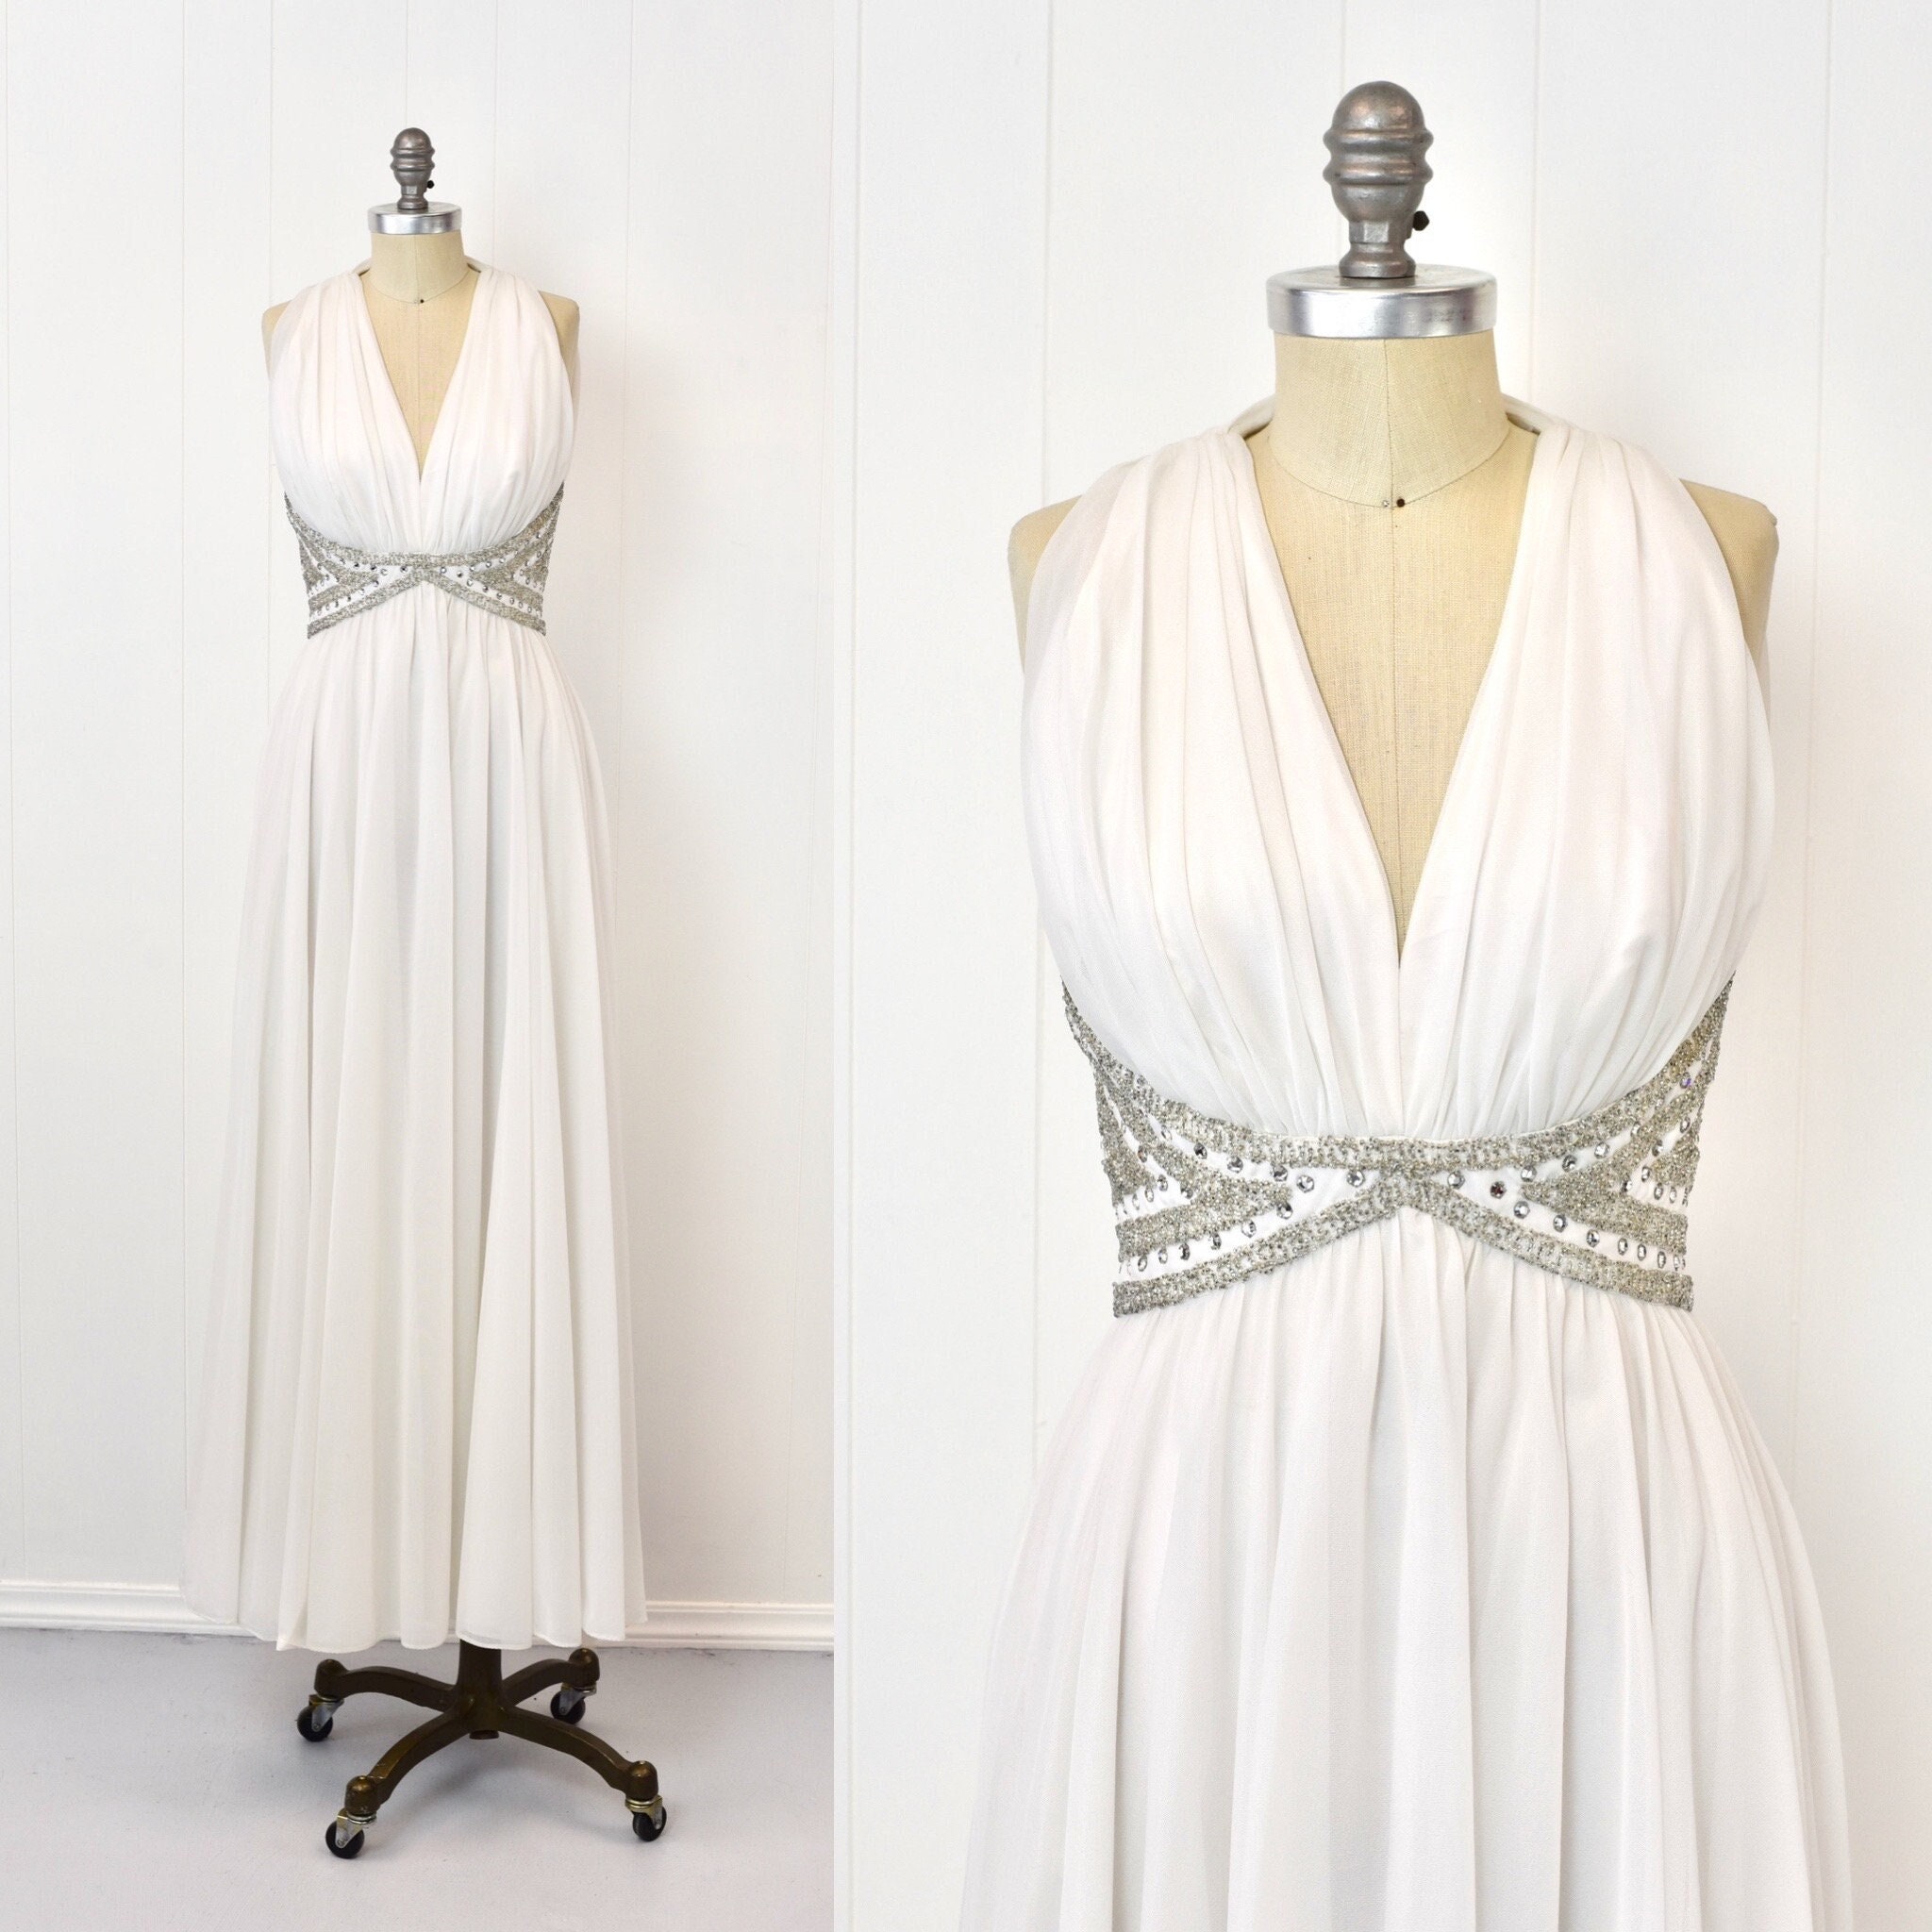 Jean-Louis Berthault designer: dress worn by Marilyn Monroe